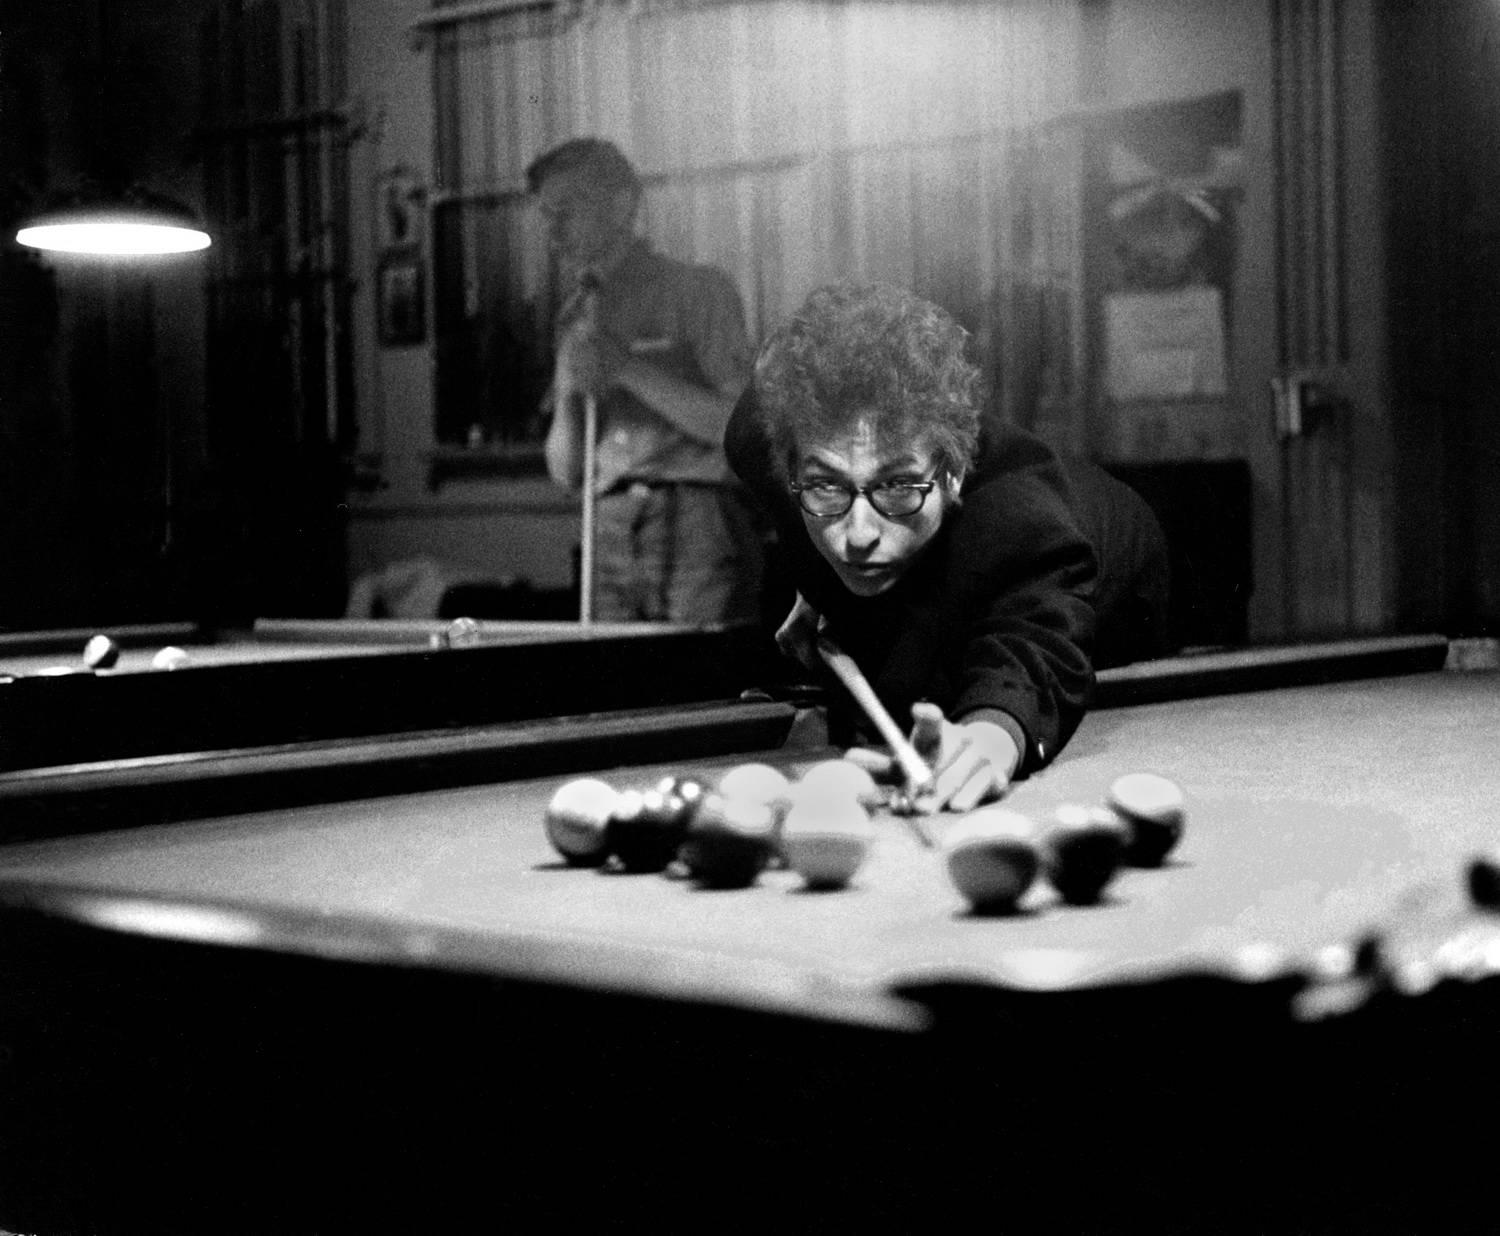 Daniel Kramer Black and White Photograph - Bob Dylan Playing Pool, Kingston, NY